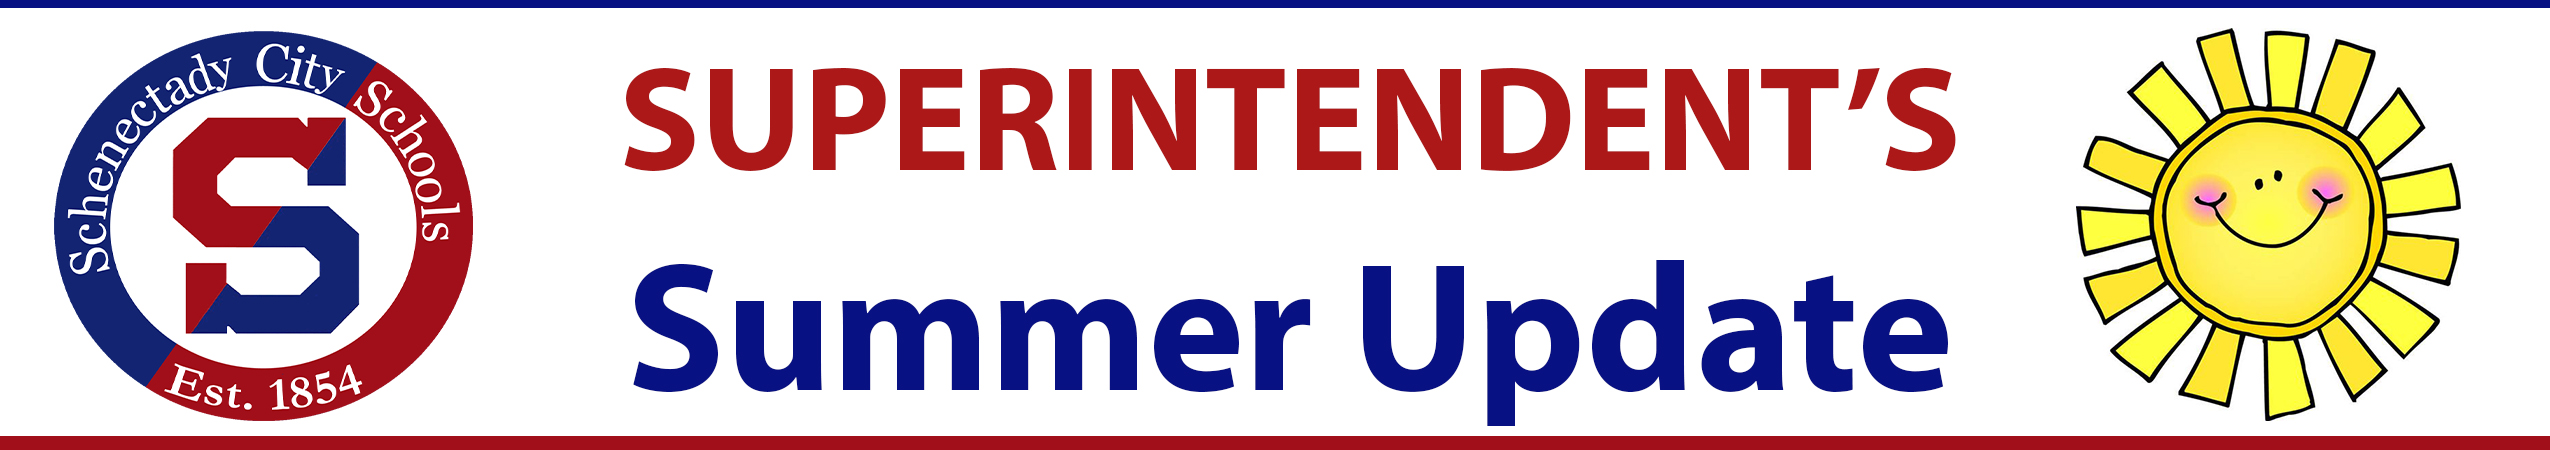 Superintendent's Summer Update banner